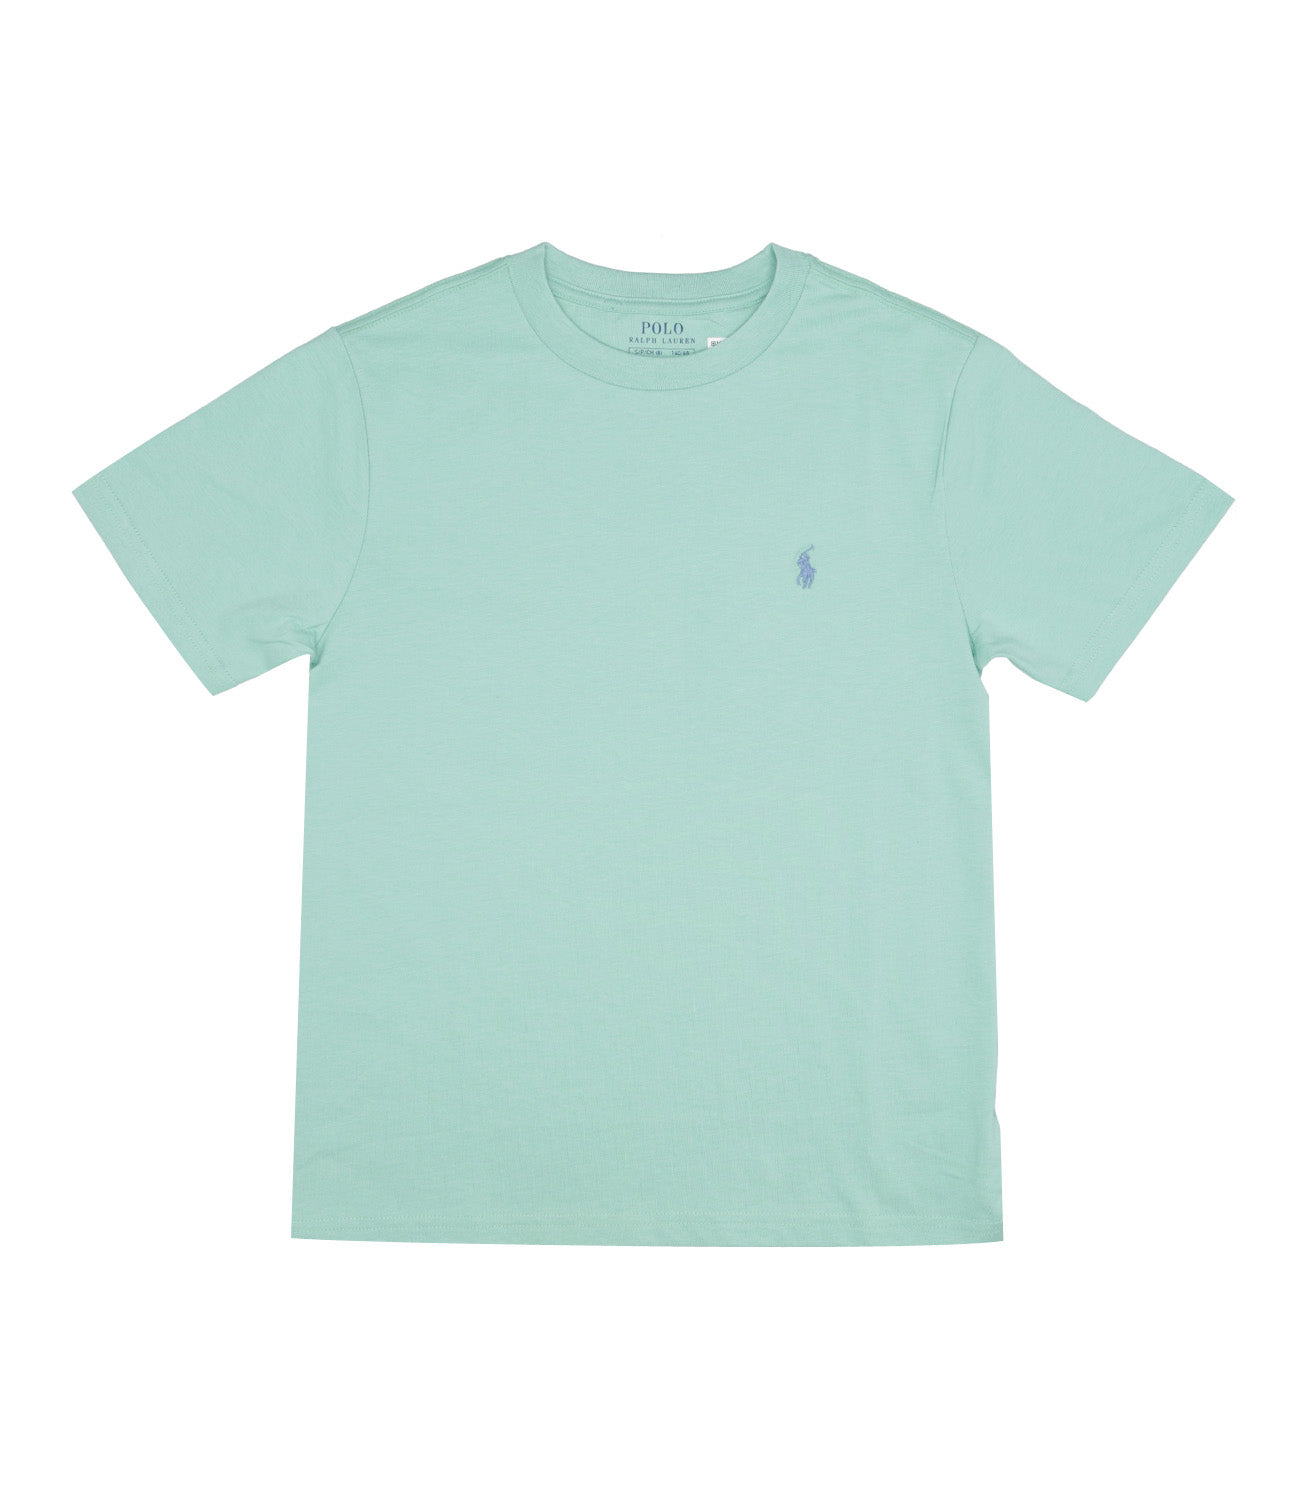 Ralph Lauren Childrenswear | Sage Green T-Shirt